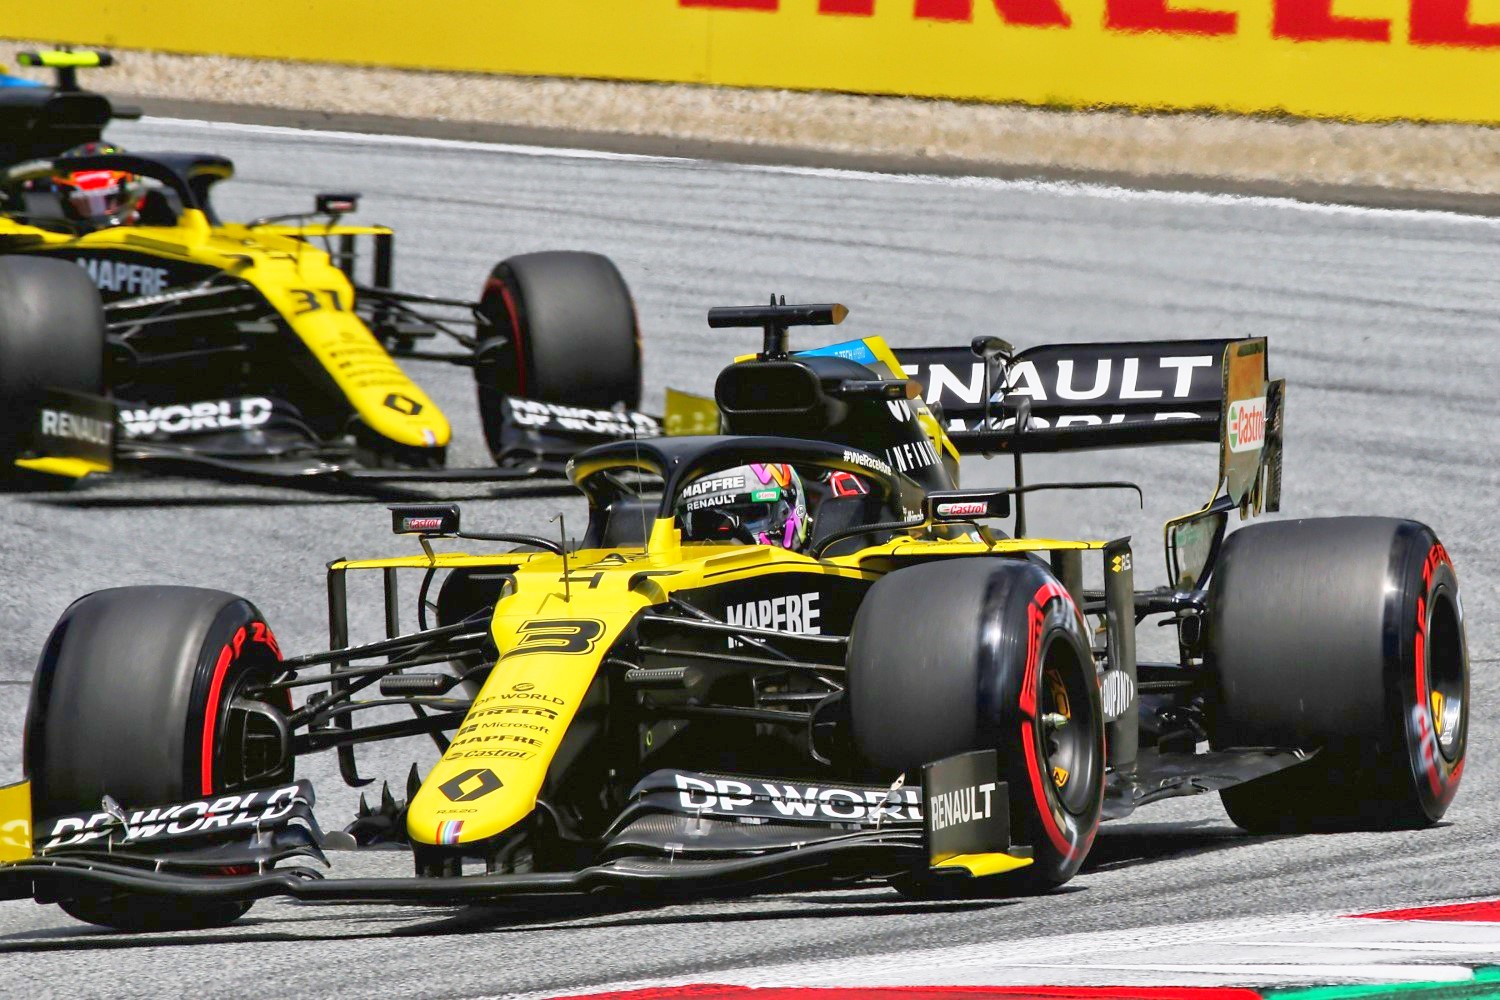 Alonso will take Daniel Ricciardo's seat at Renault